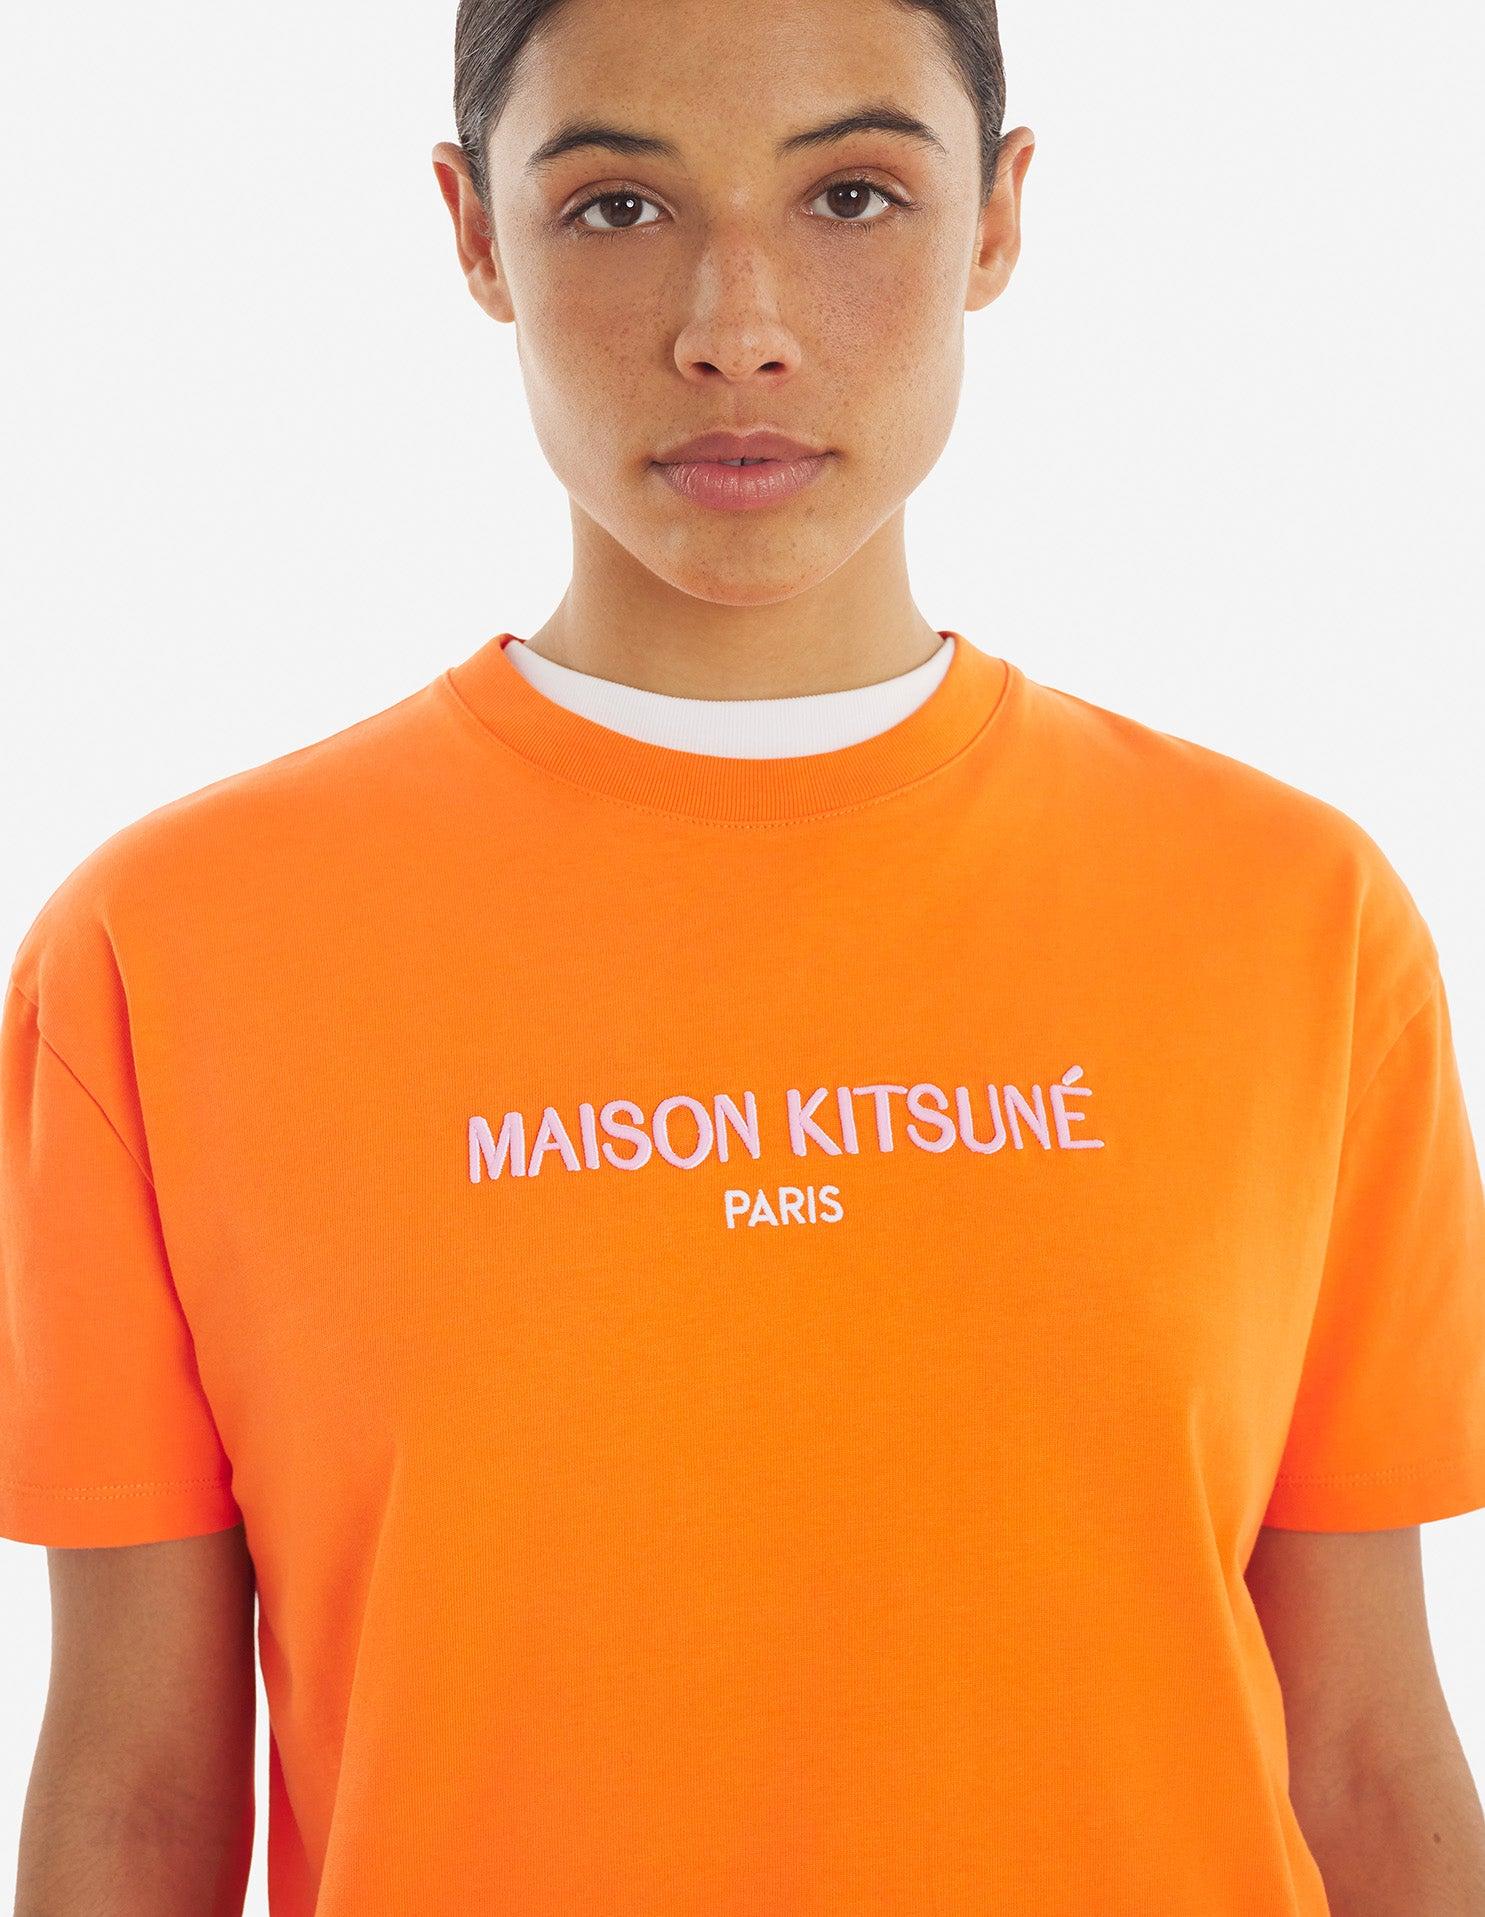 Maison Kitsuné Paris Boxy Tee-shirt Neon Orange | Lyst